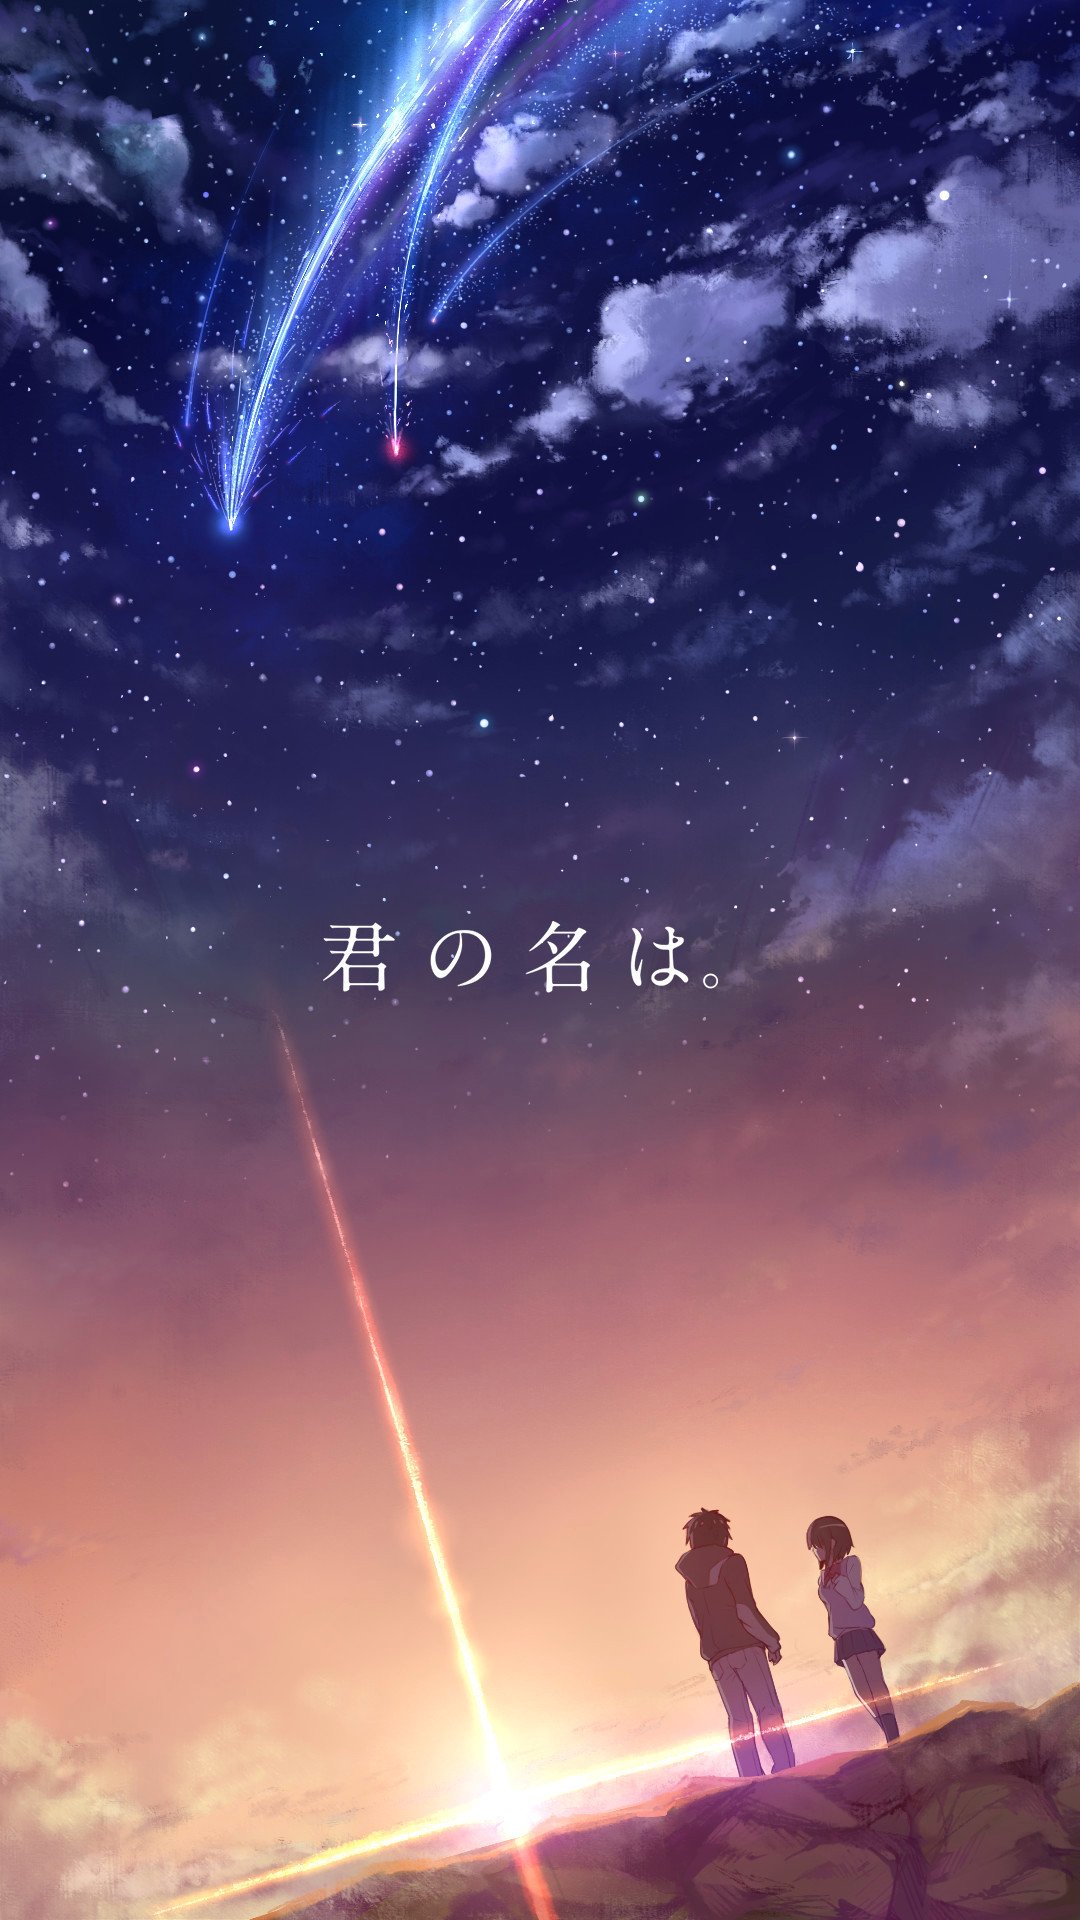 1080x iPhone 8 Wallpaper Anime Inspirational Name Wallpaper Live